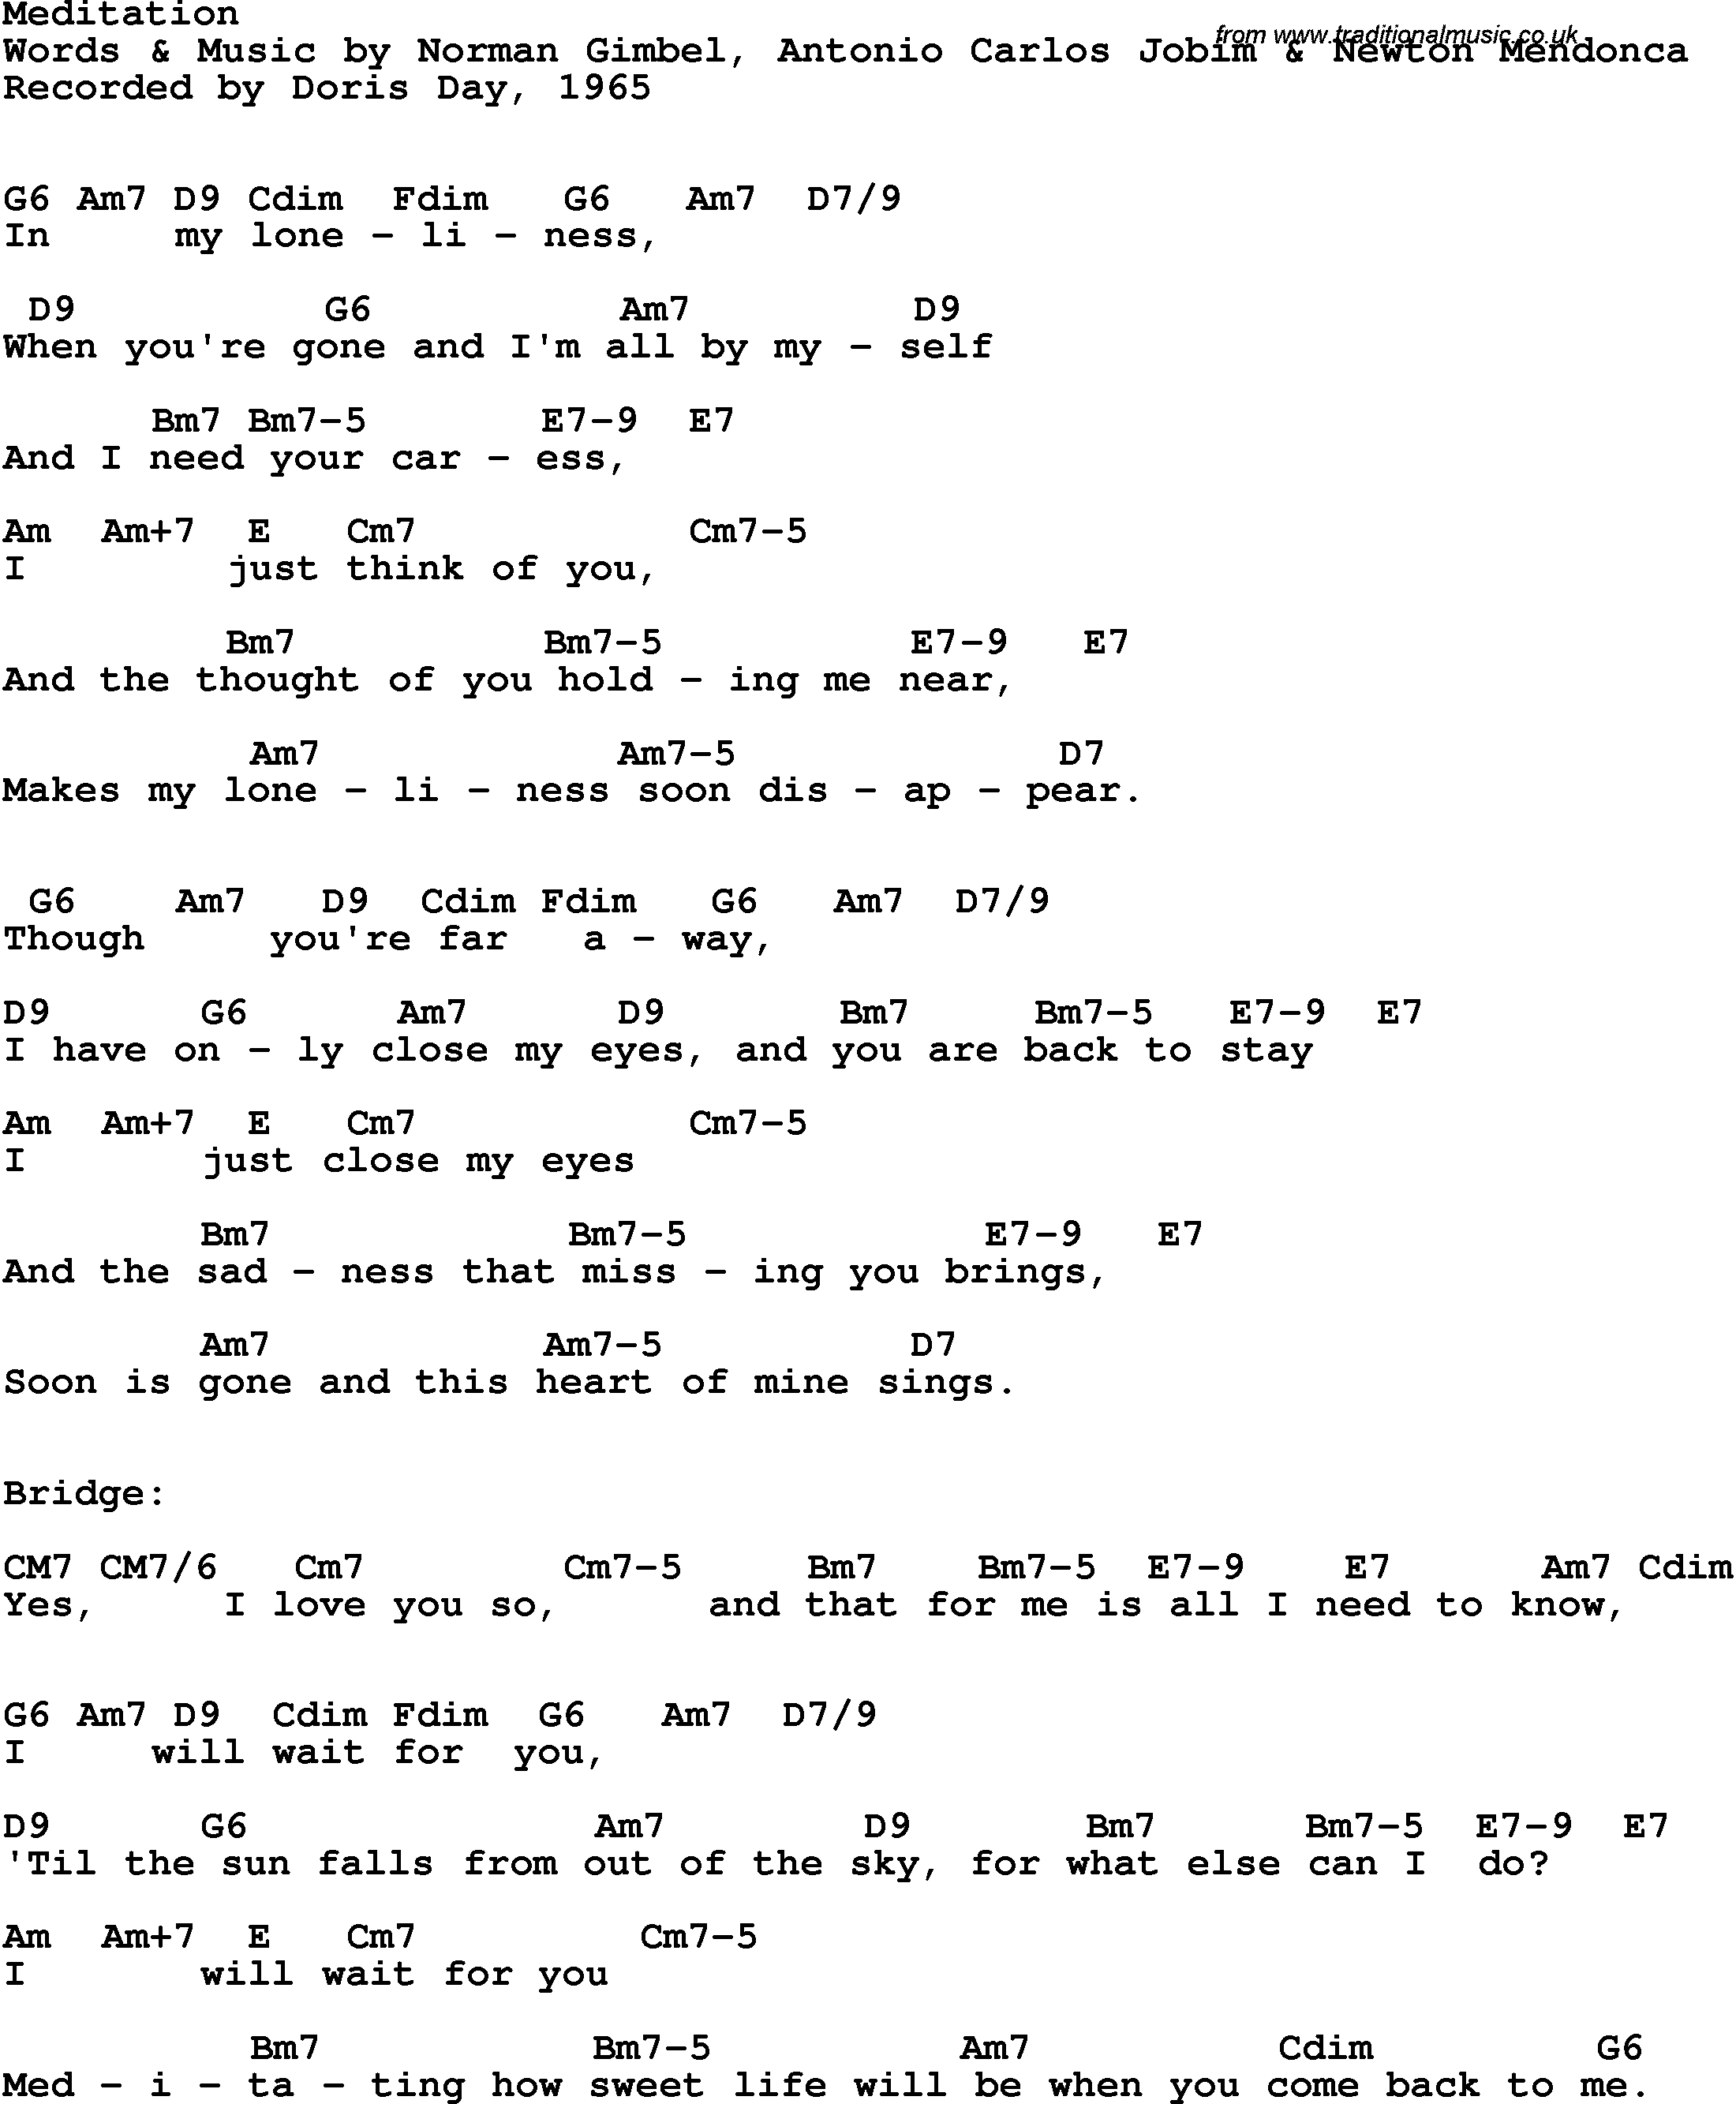 Song Lyrics with guitar chords for Meditation - Doris Day, 1965